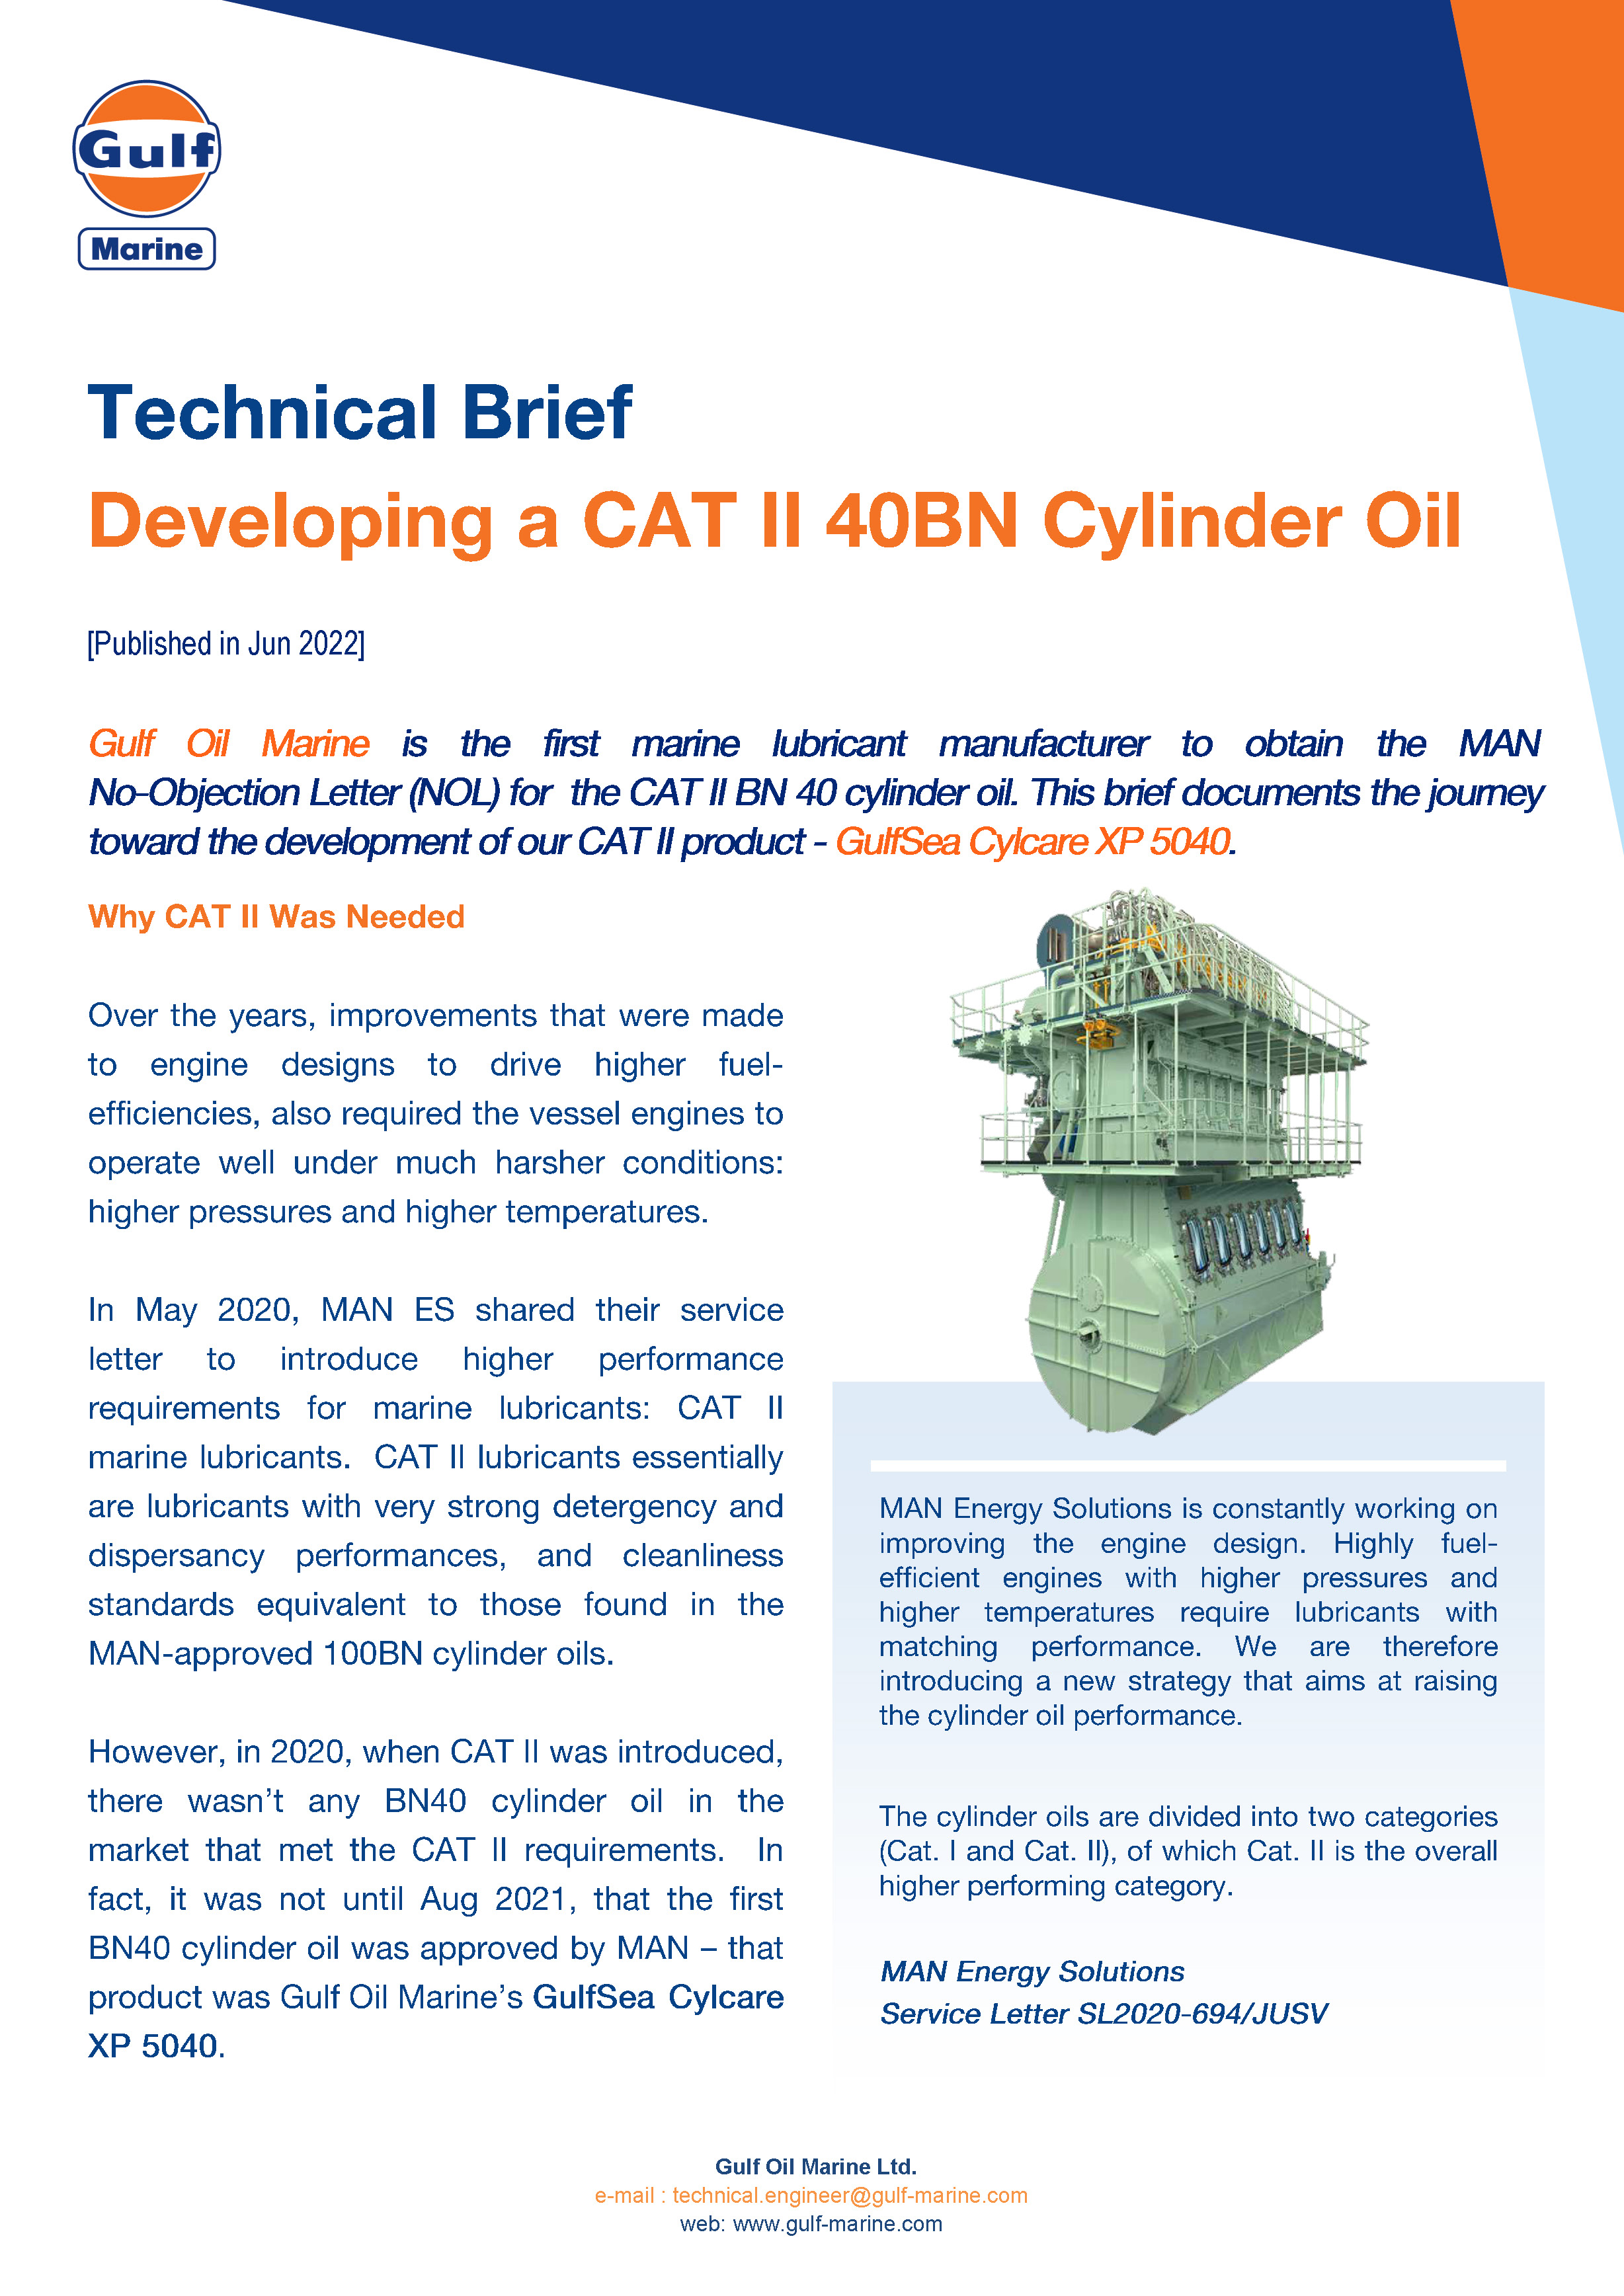 tb022-developing_a_cat_ii_40bn_cylinder_oil.pdf